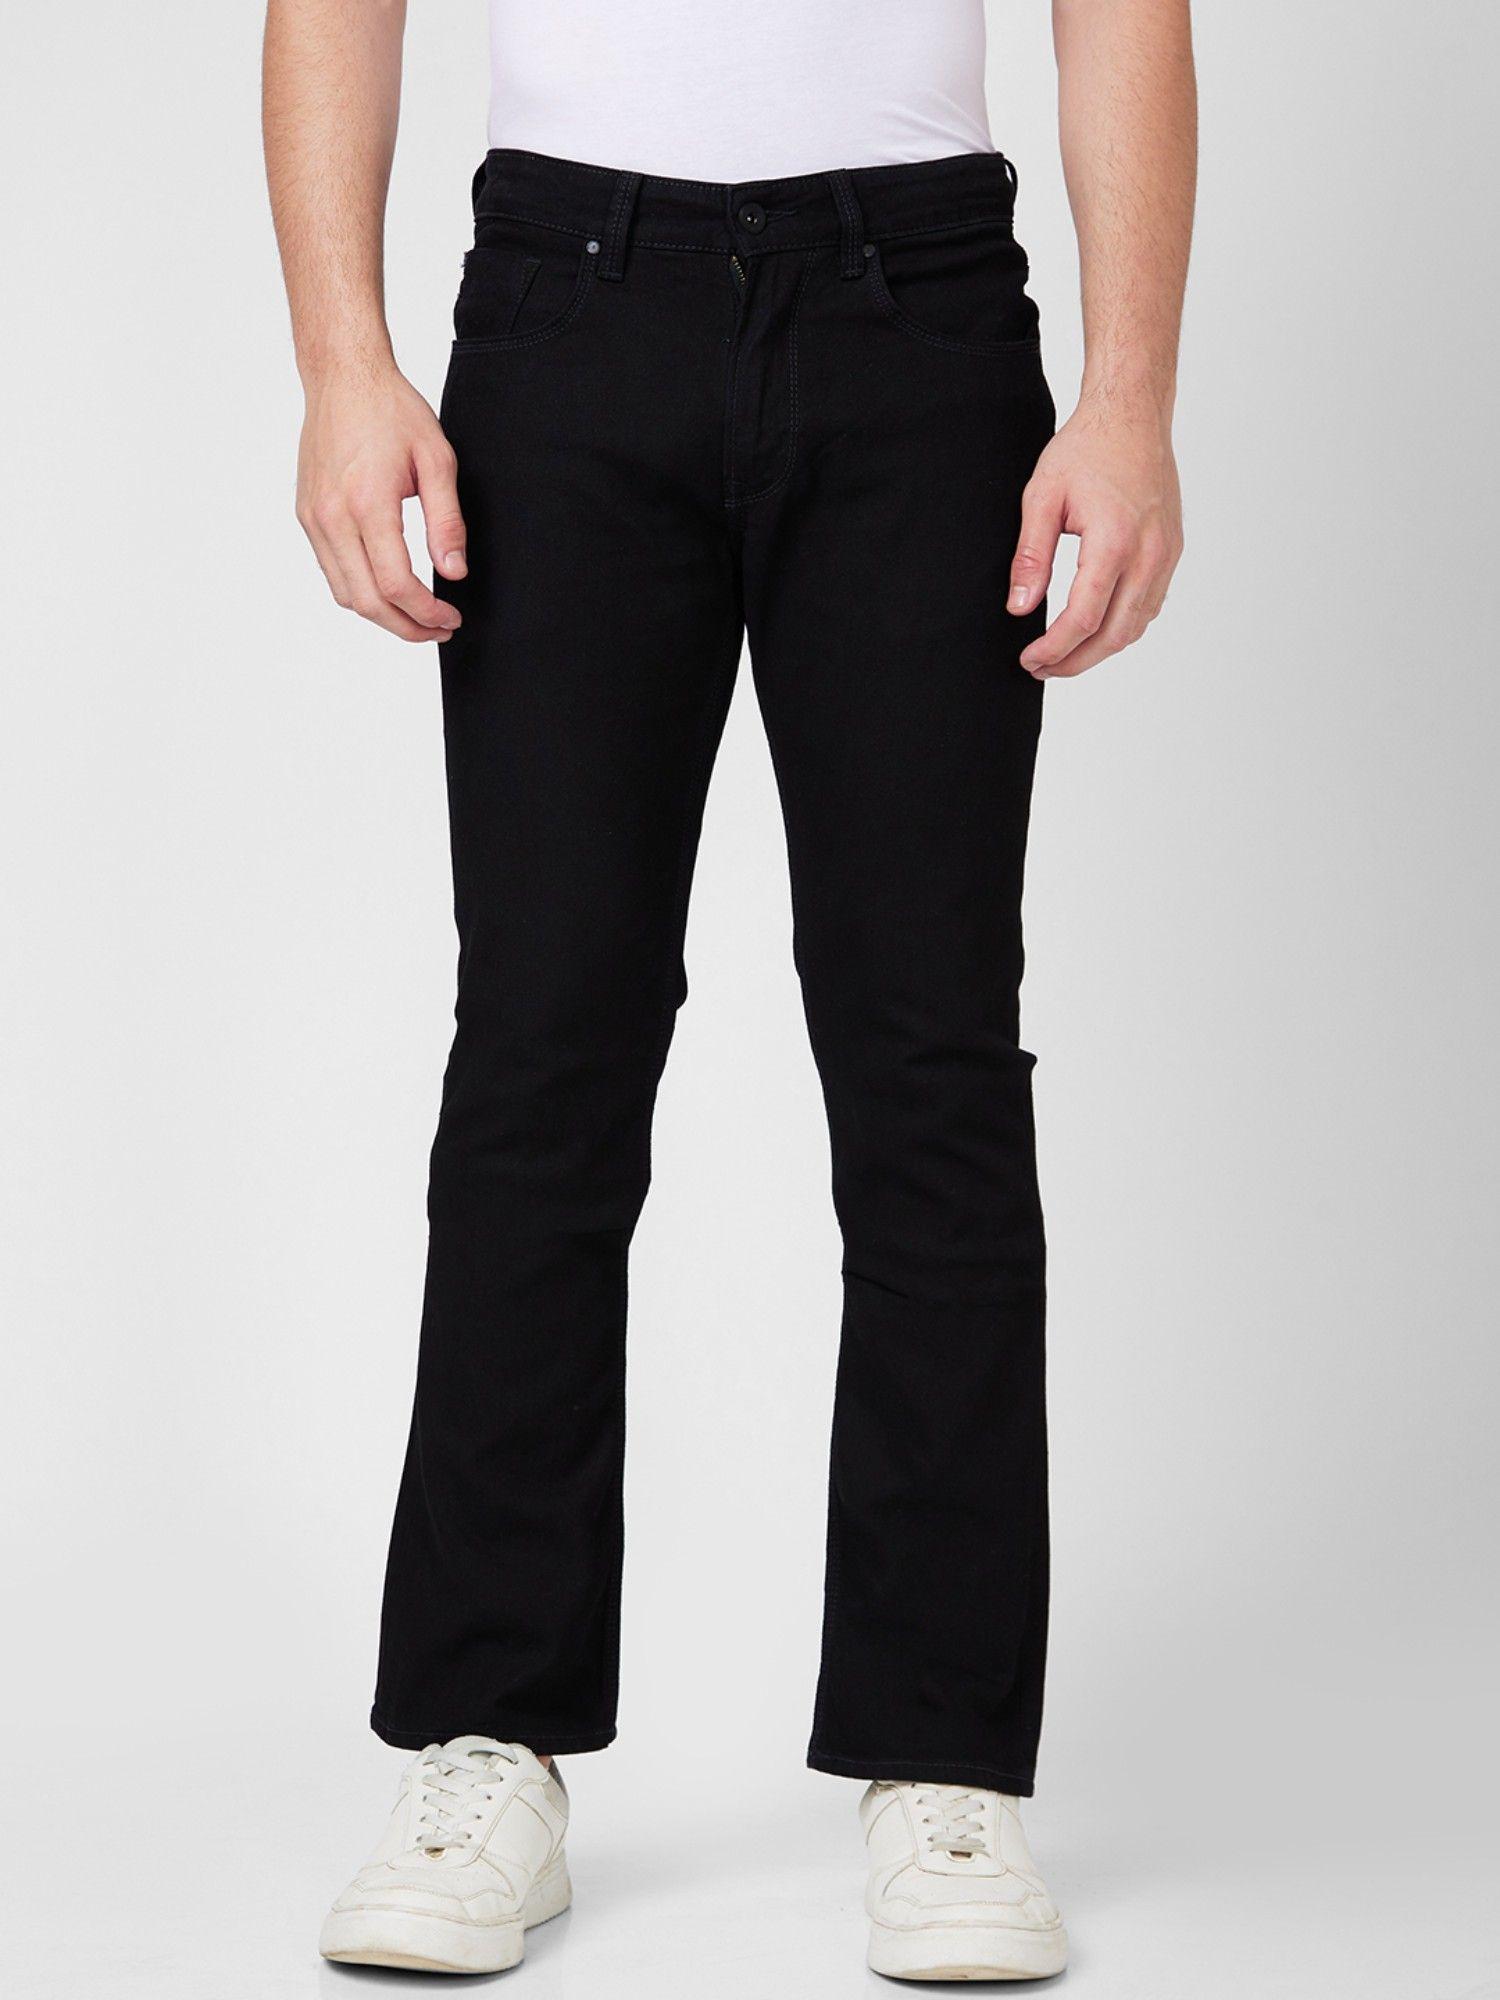 mid rise comfort fit regular length black jeans